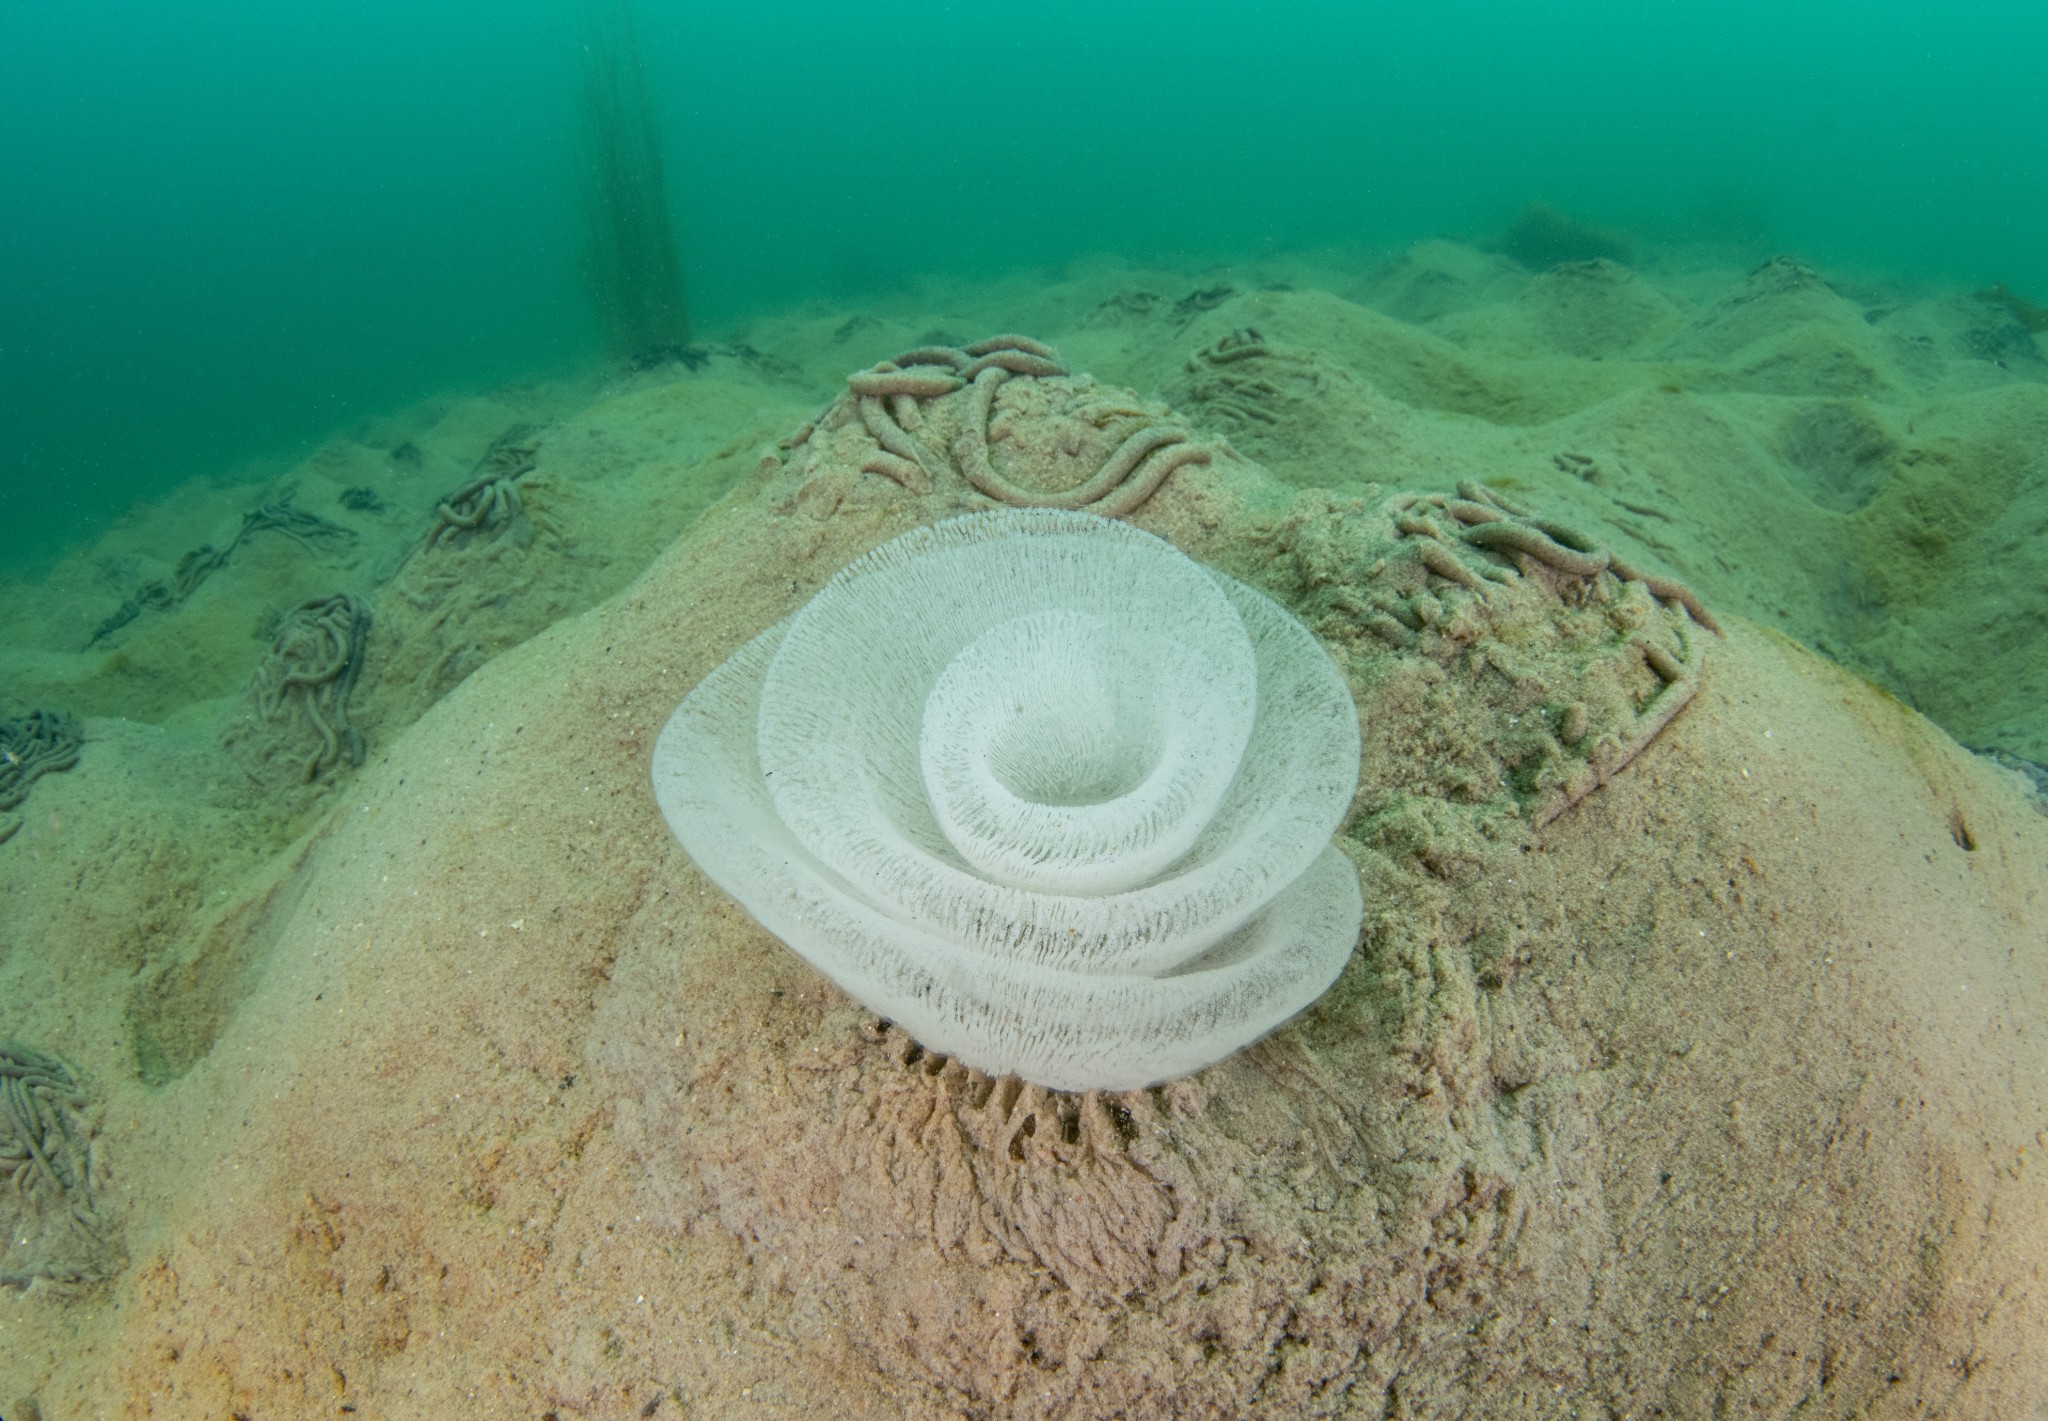 Sea slug egg spiral at Inganess, Orkney - image by Raymond Besant